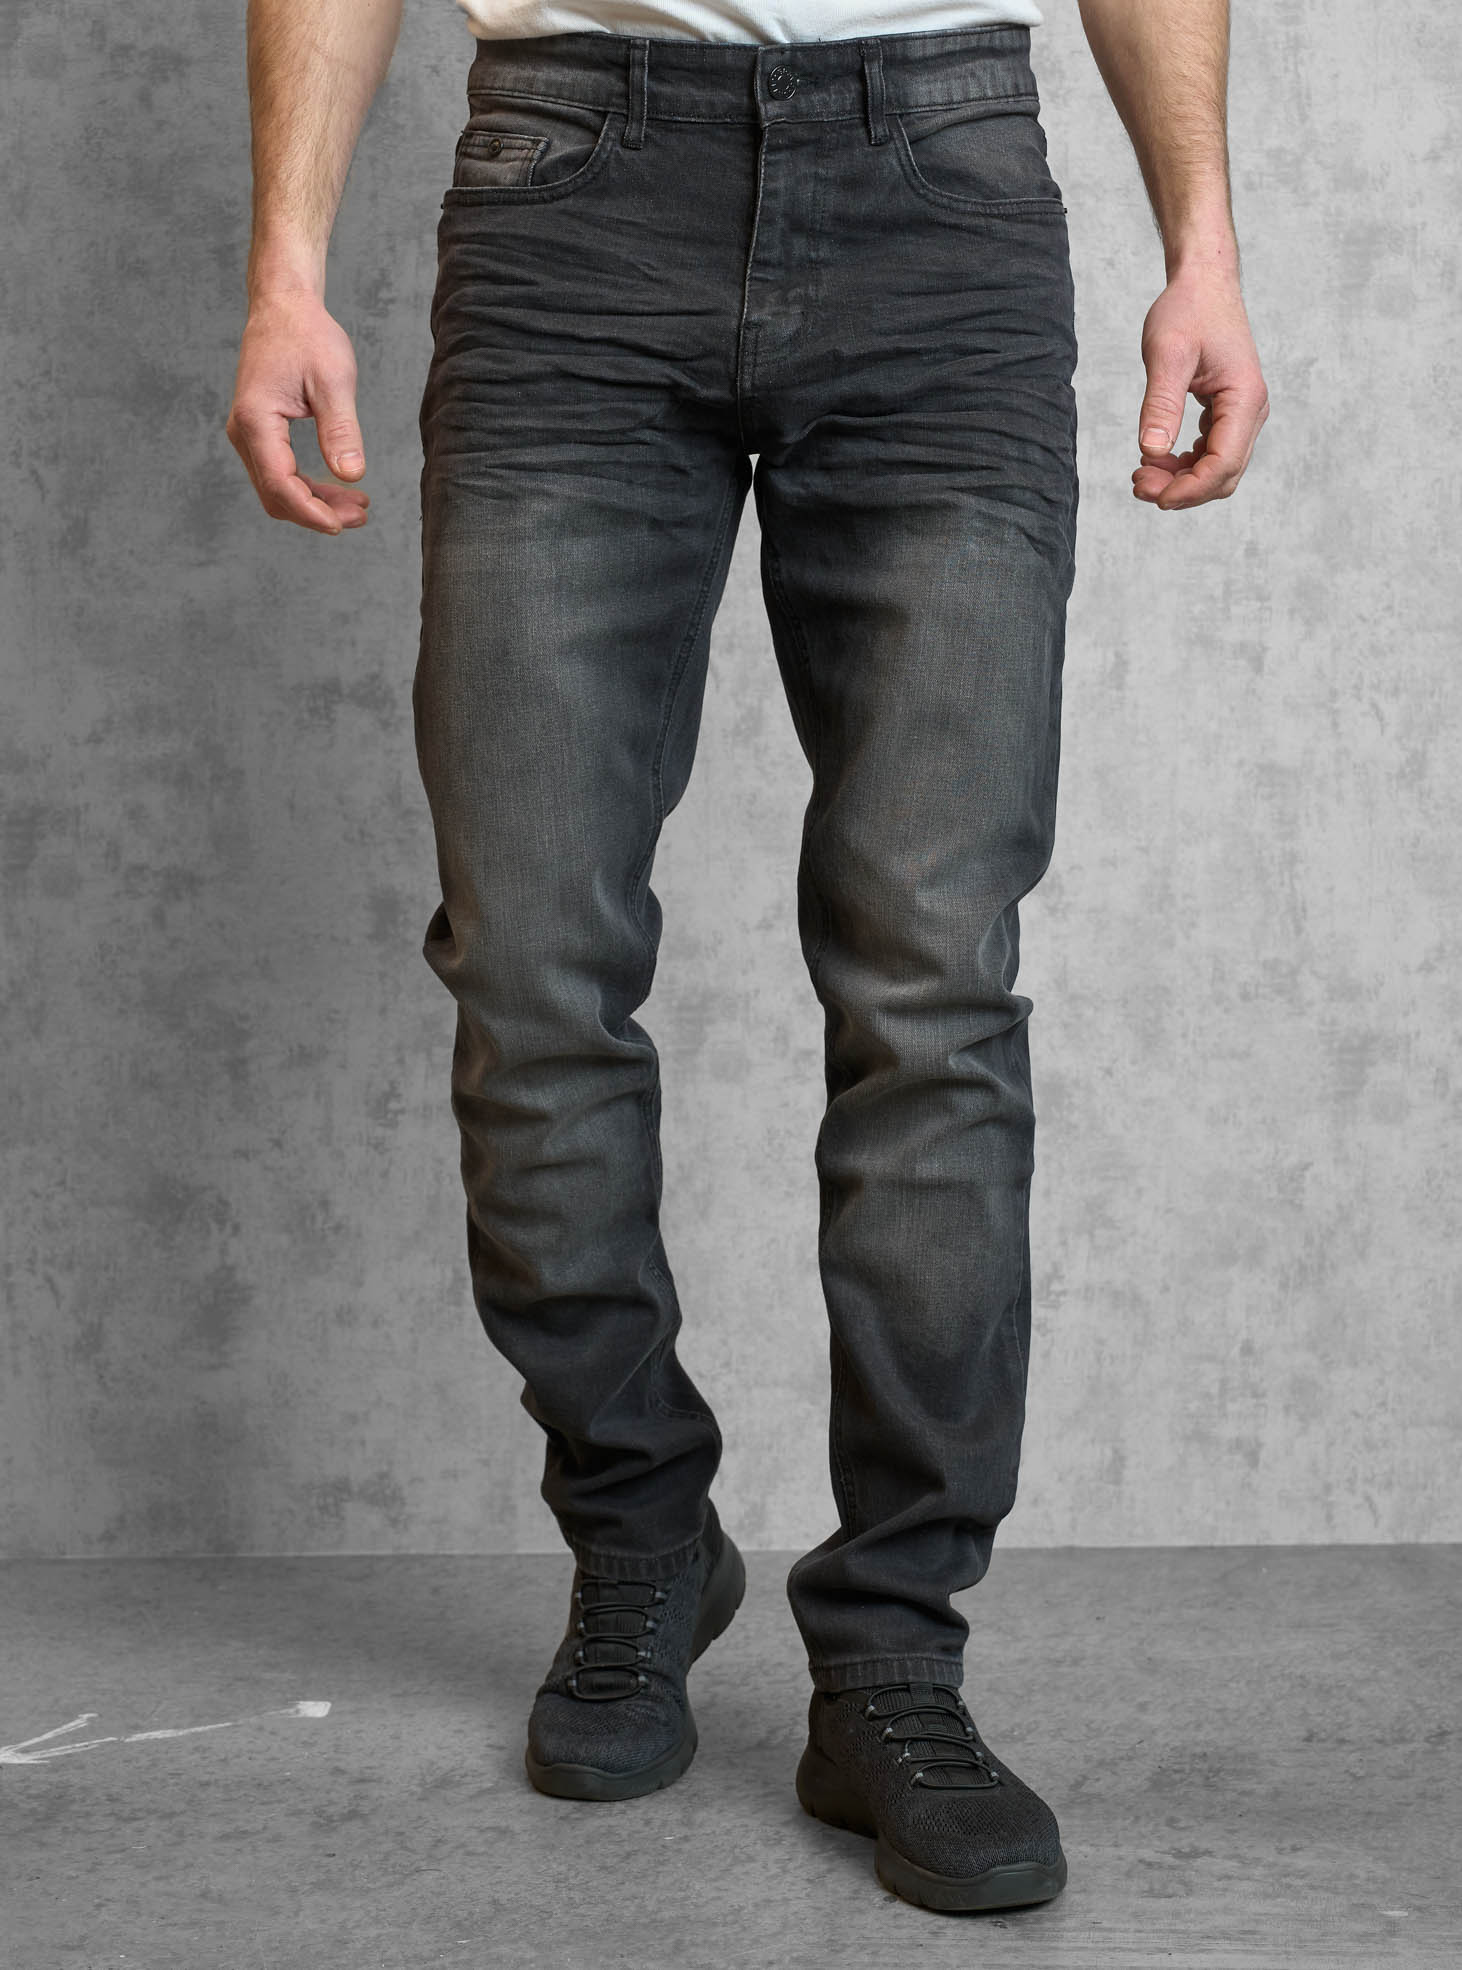 Indigo Denim Heren jeans - denim lengte 32